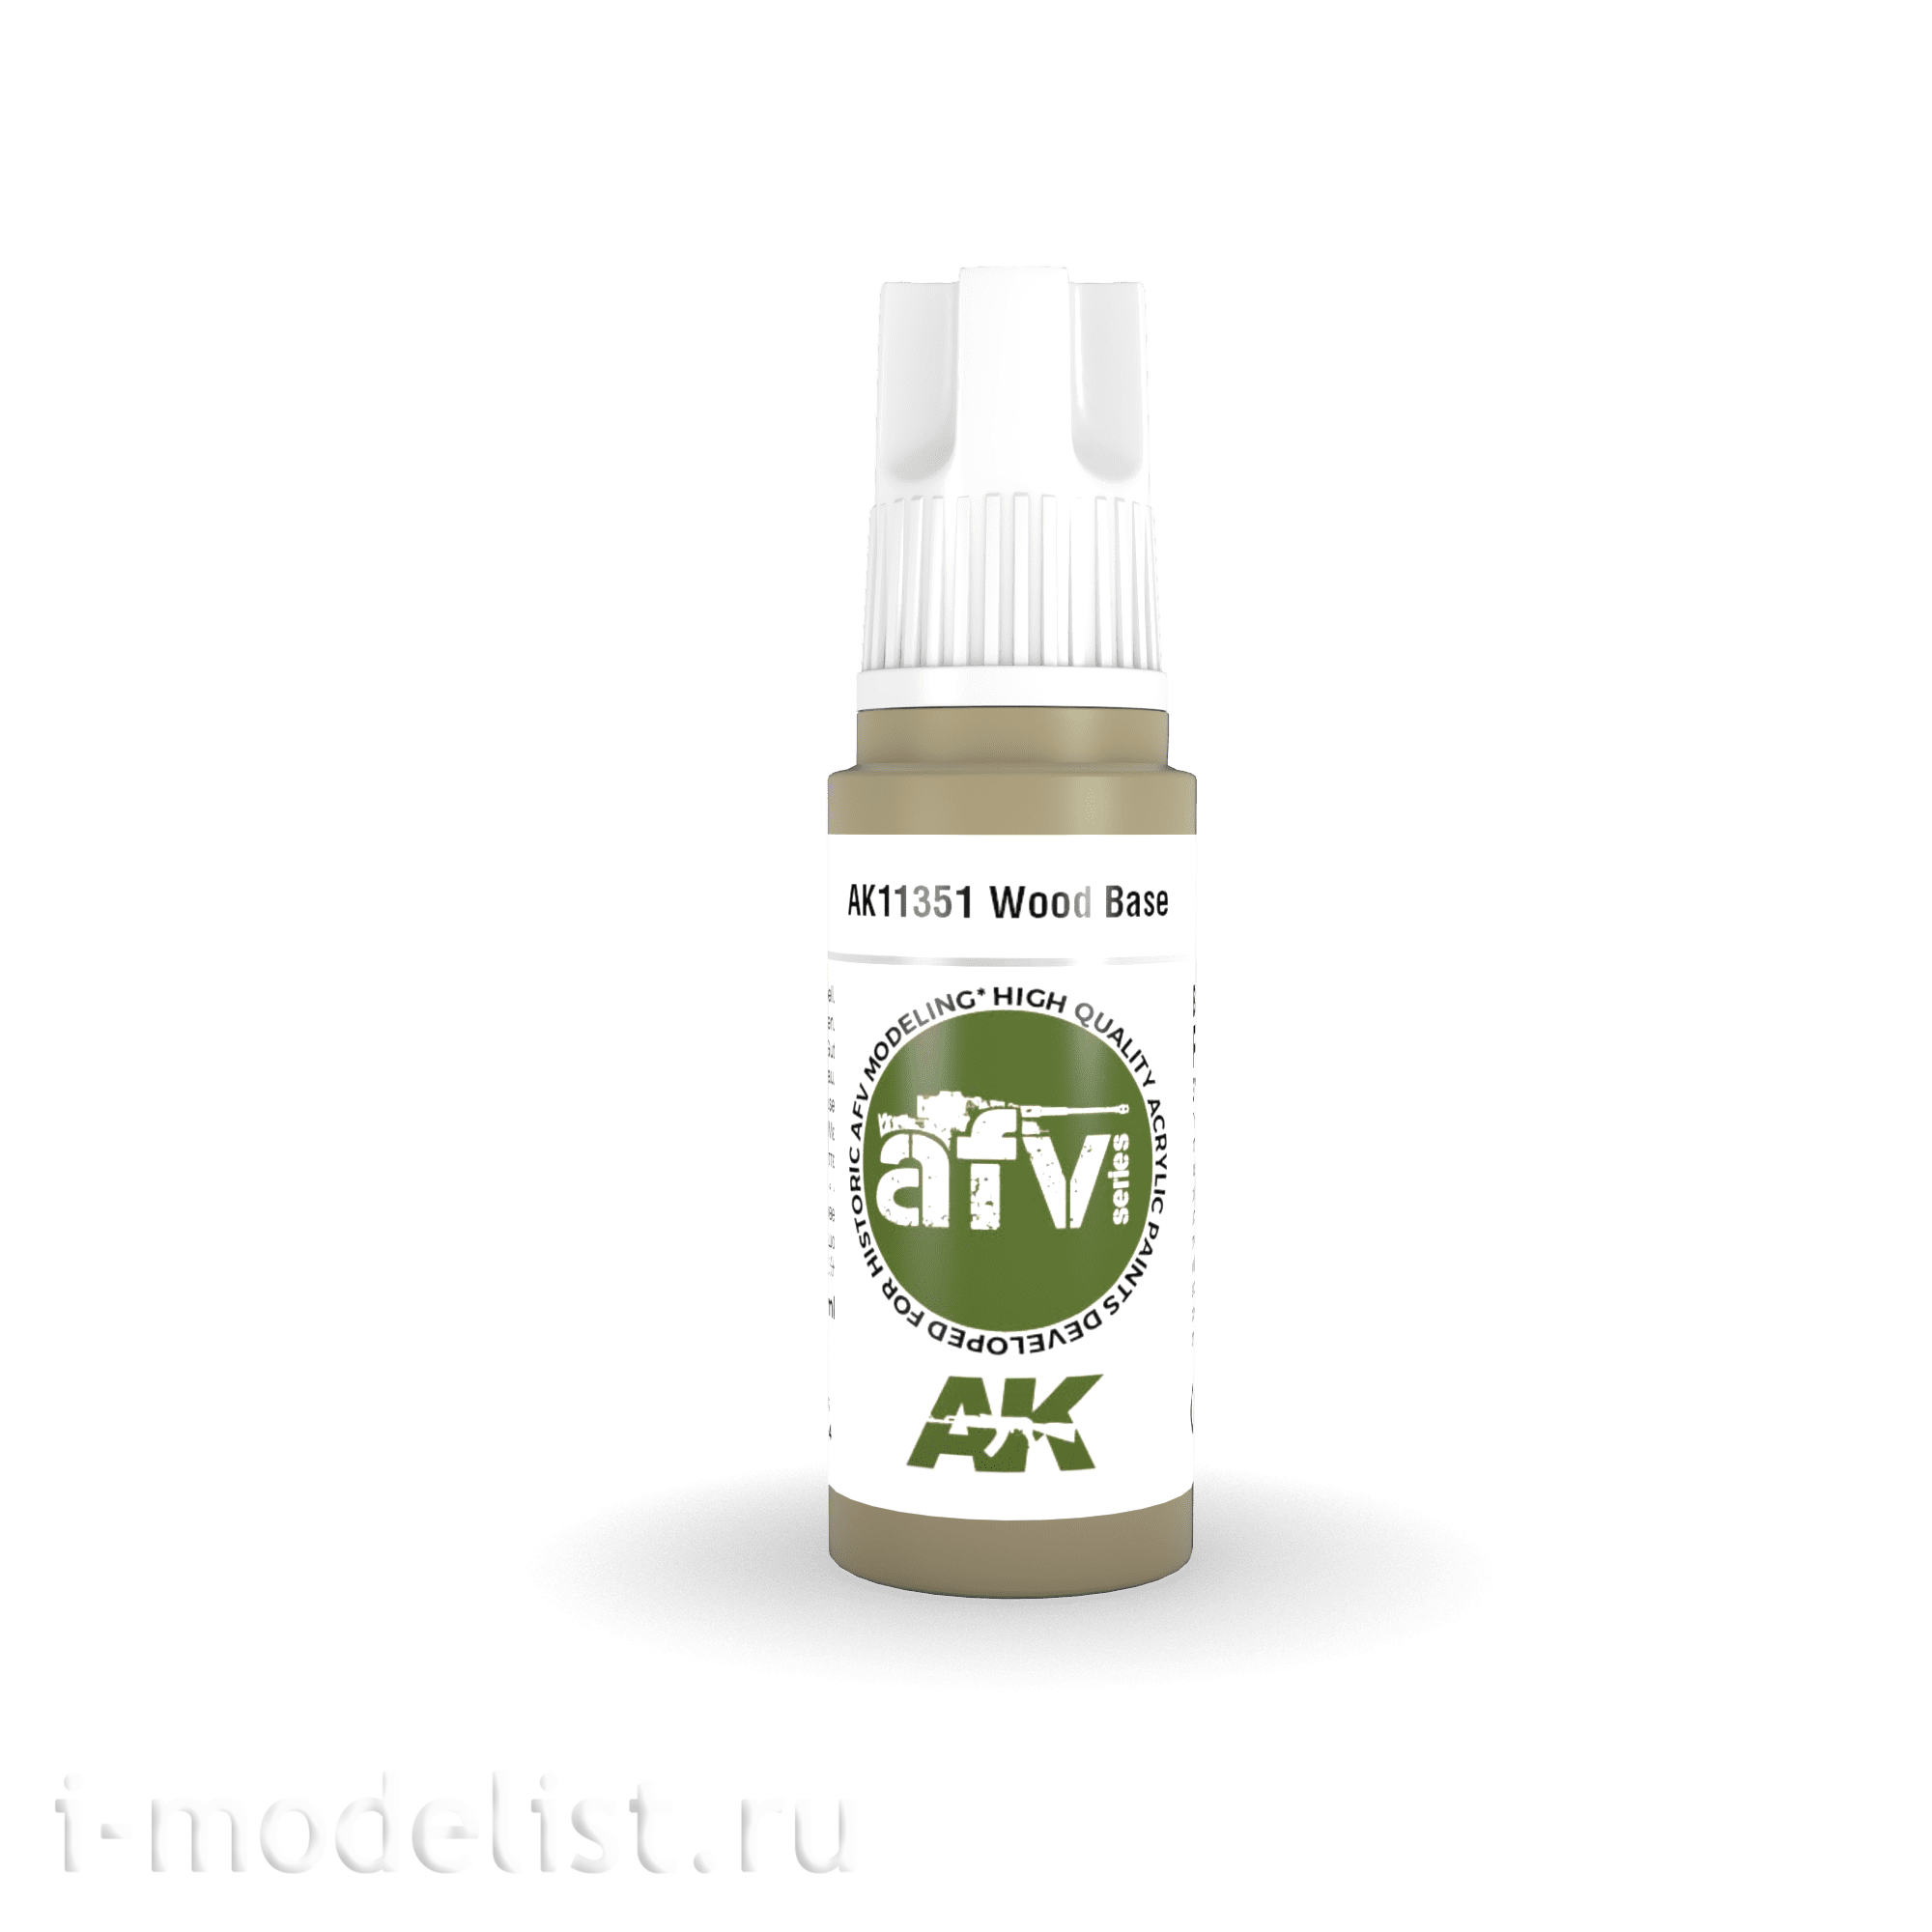 AK11351 AK Interactive acrylic paint WOOD BASE (wood base) 17 ml